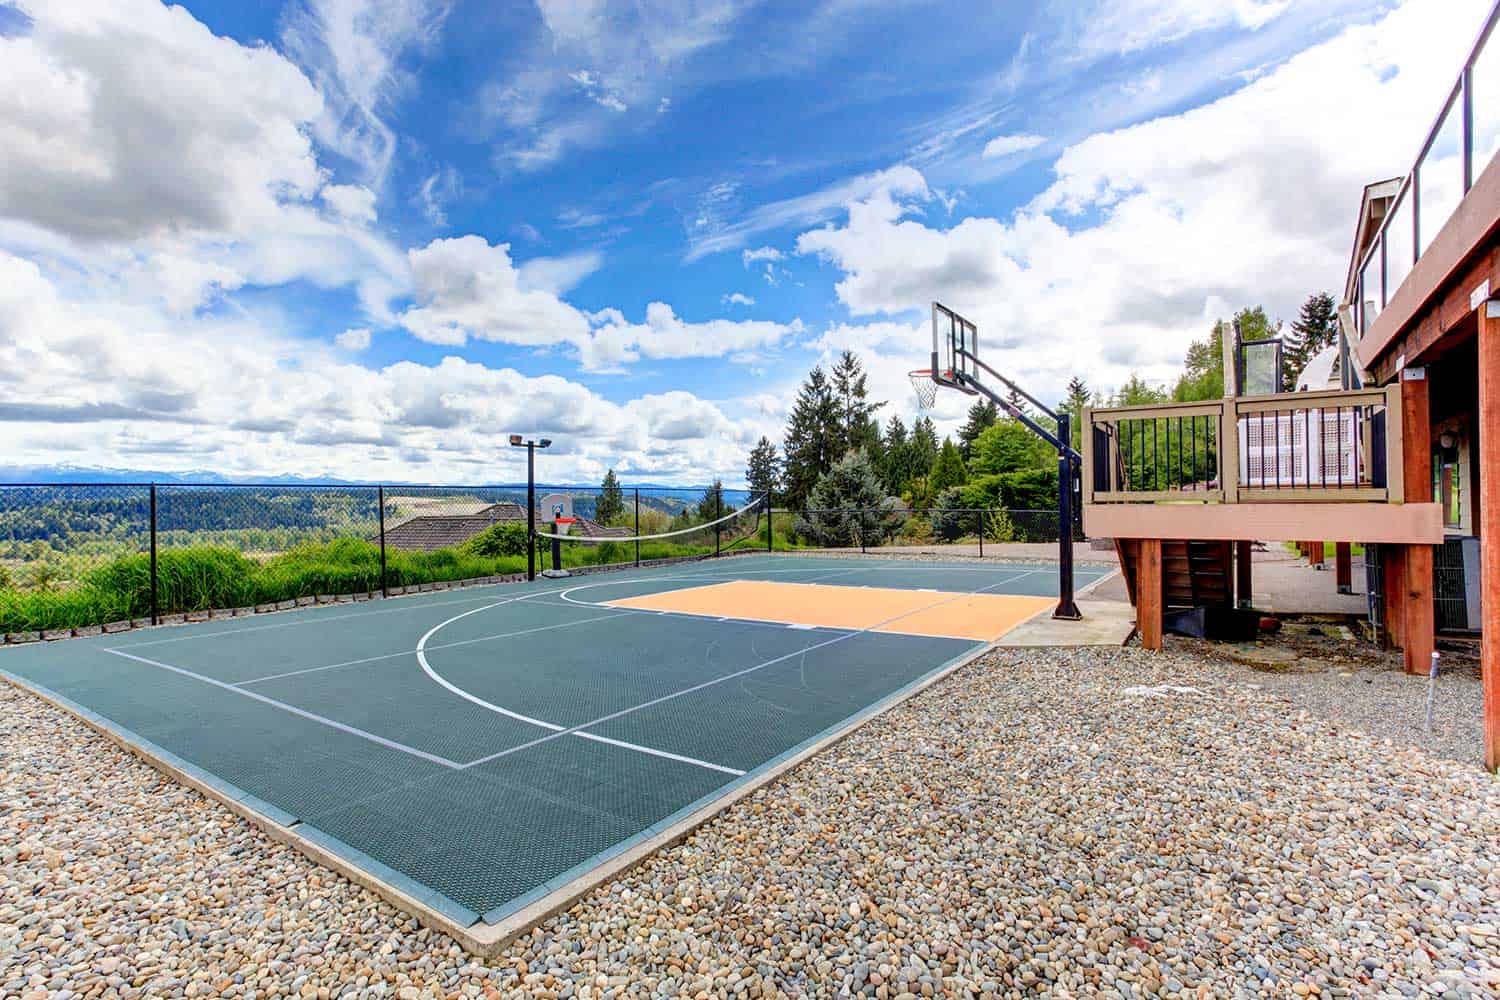 House backyard with basketball court